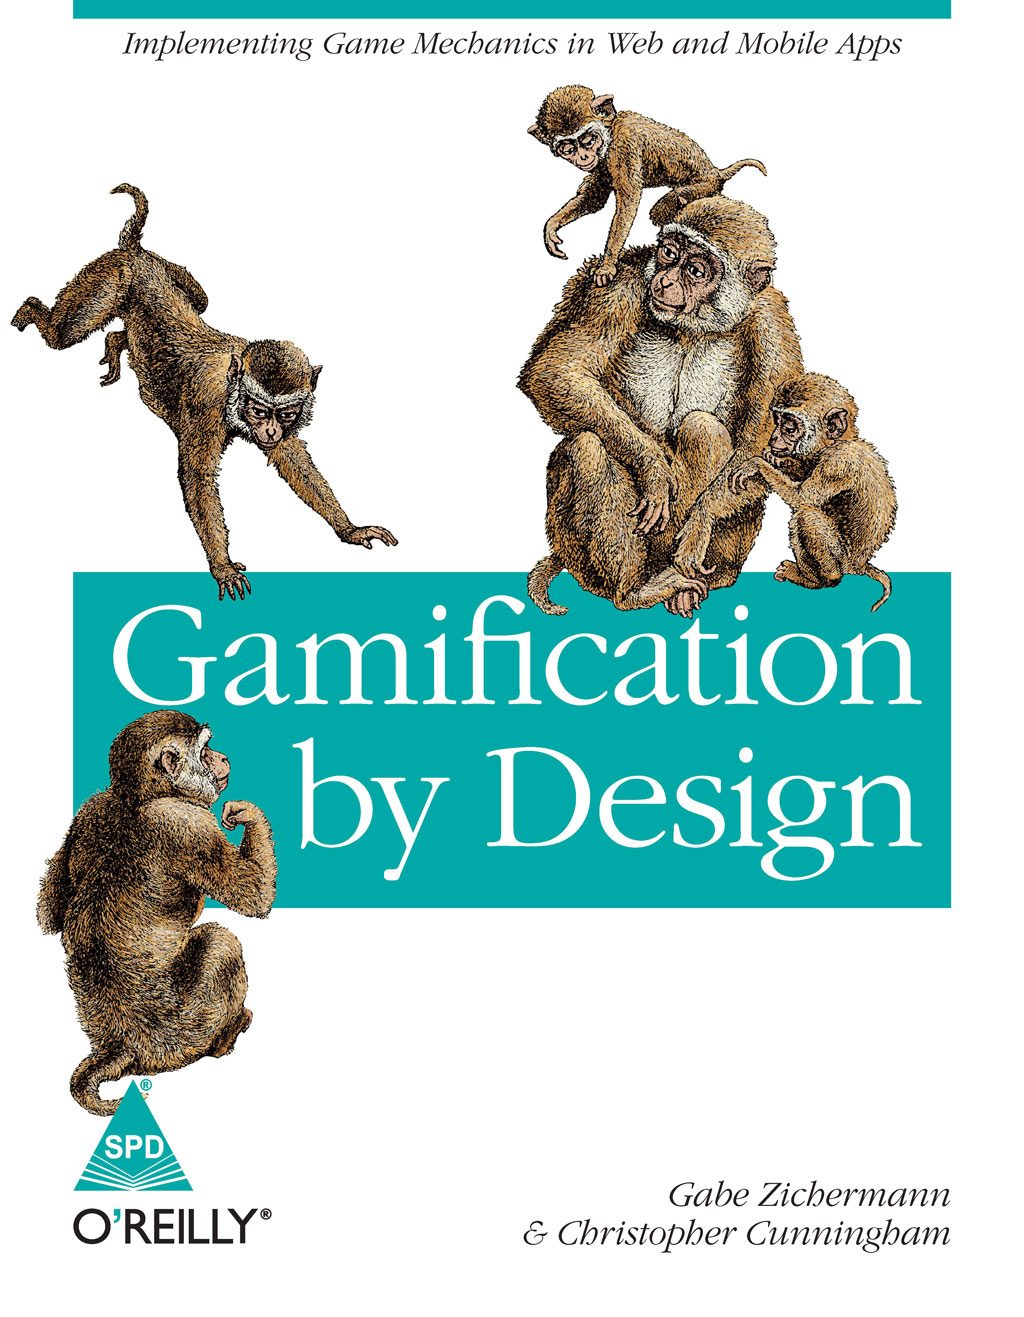 GamificationByDesign